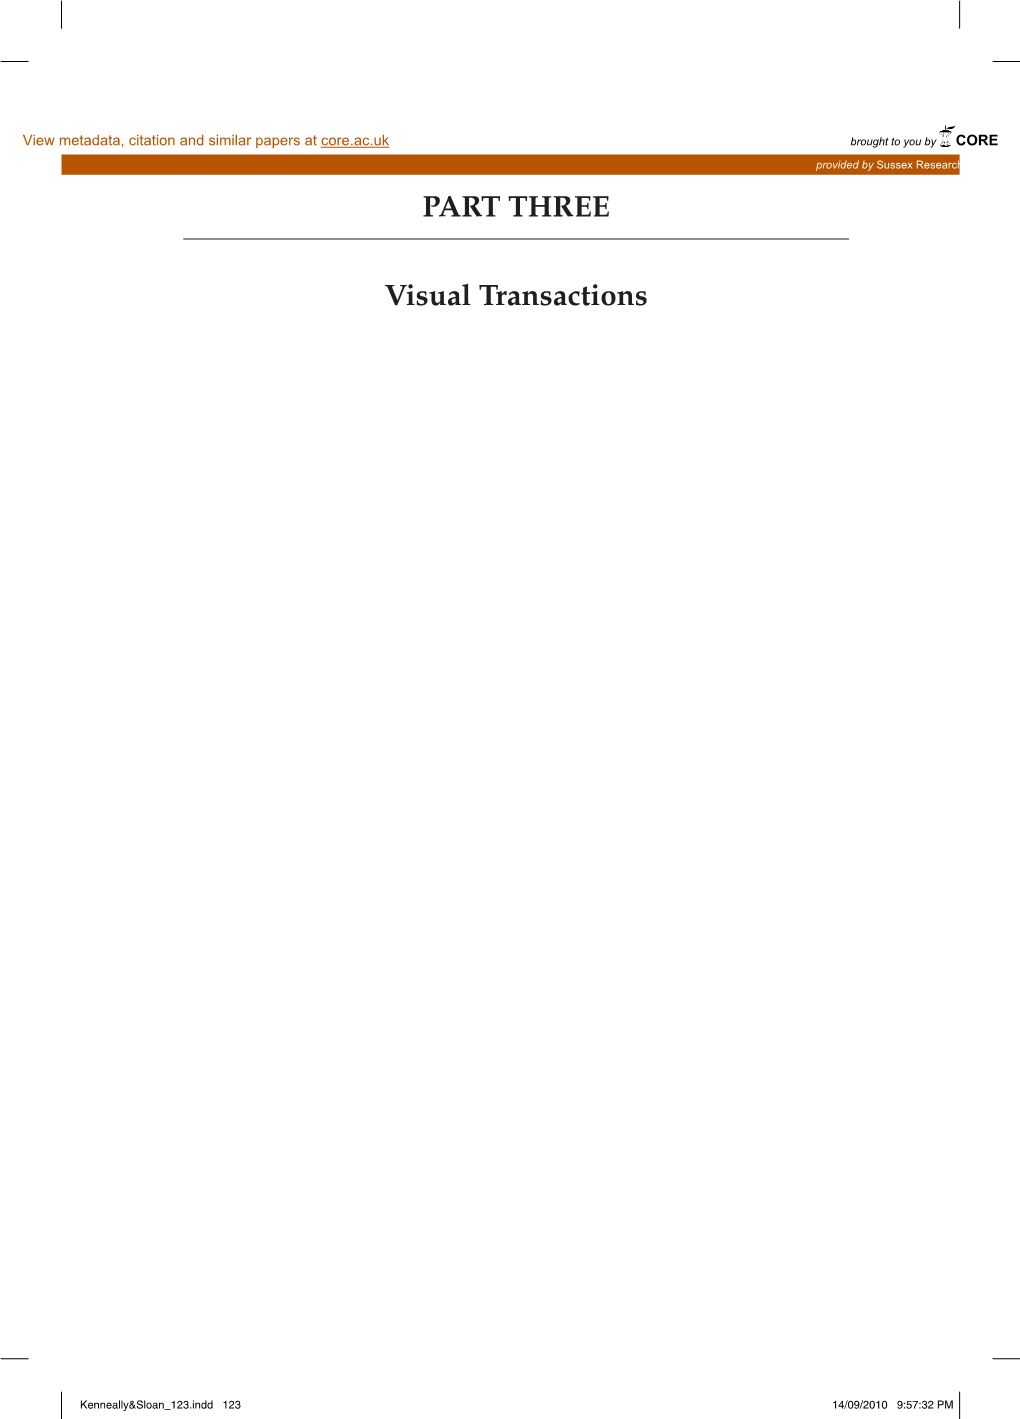 PART THREE Visual Transactions